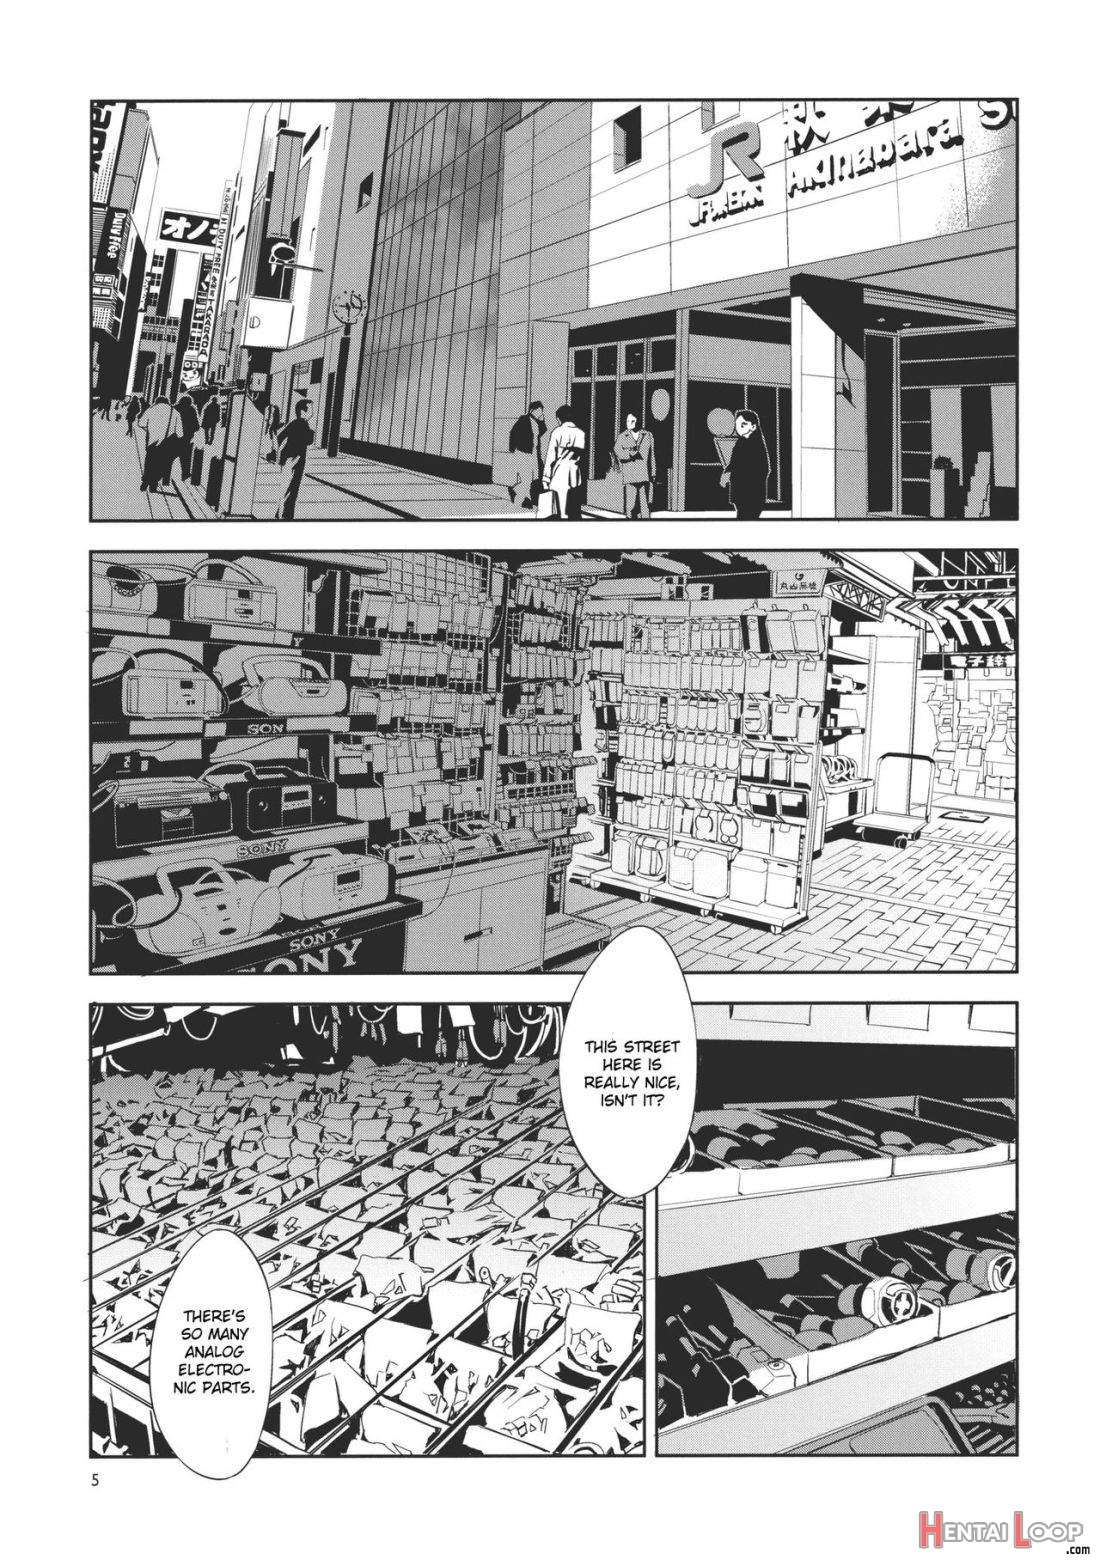 Touhou Gensou Houkai page 2